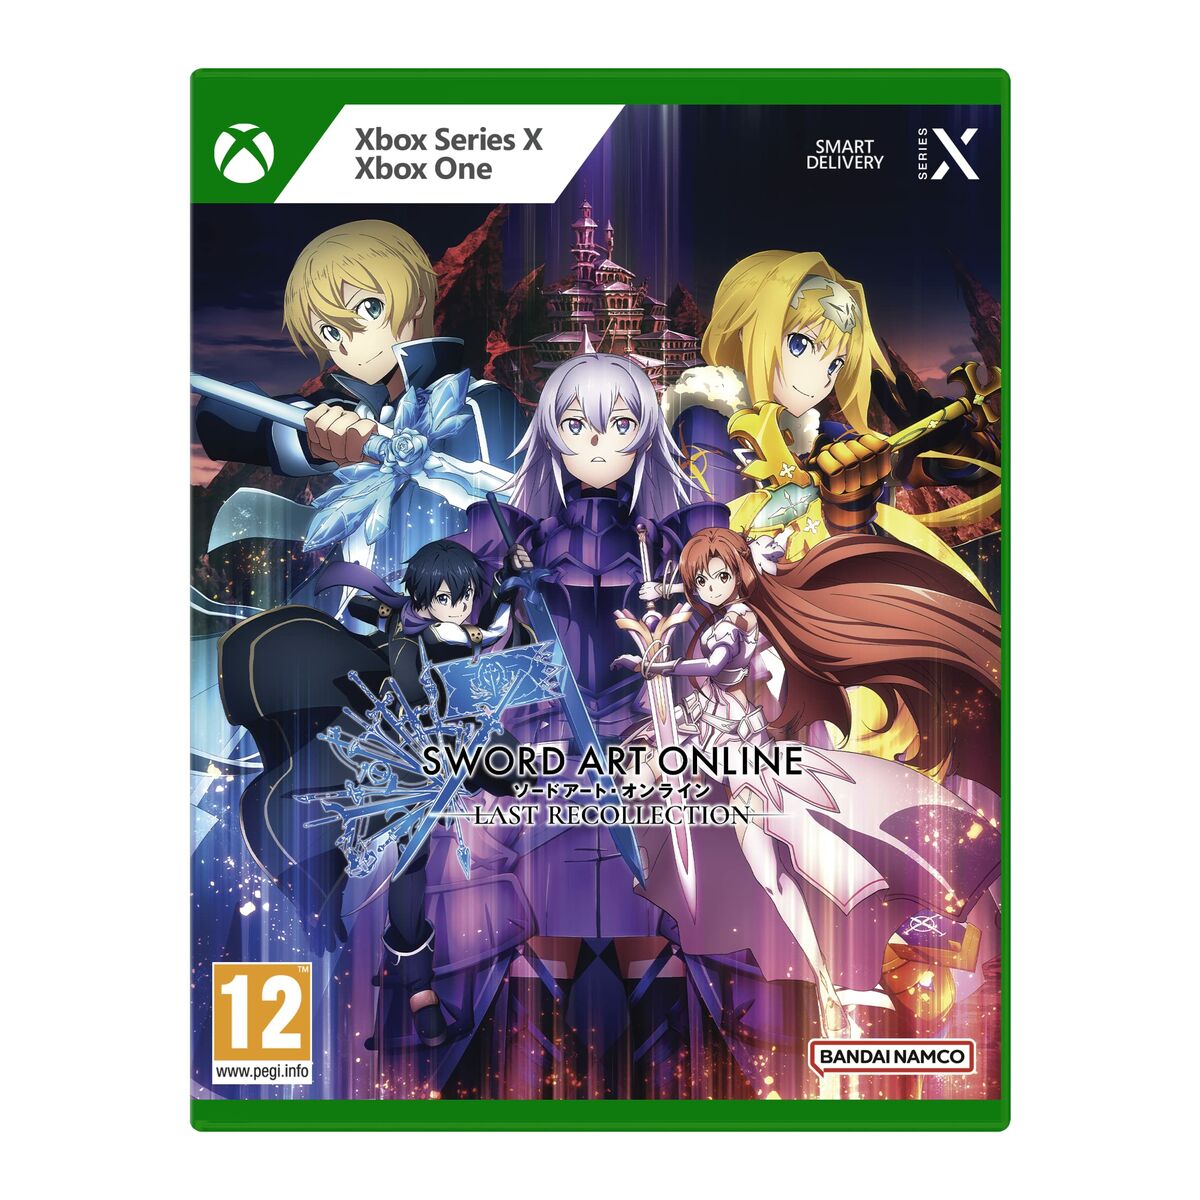 Jeu vidéo Xbox One / Series X Bandai Namco Sword Art Online: Last Recollection